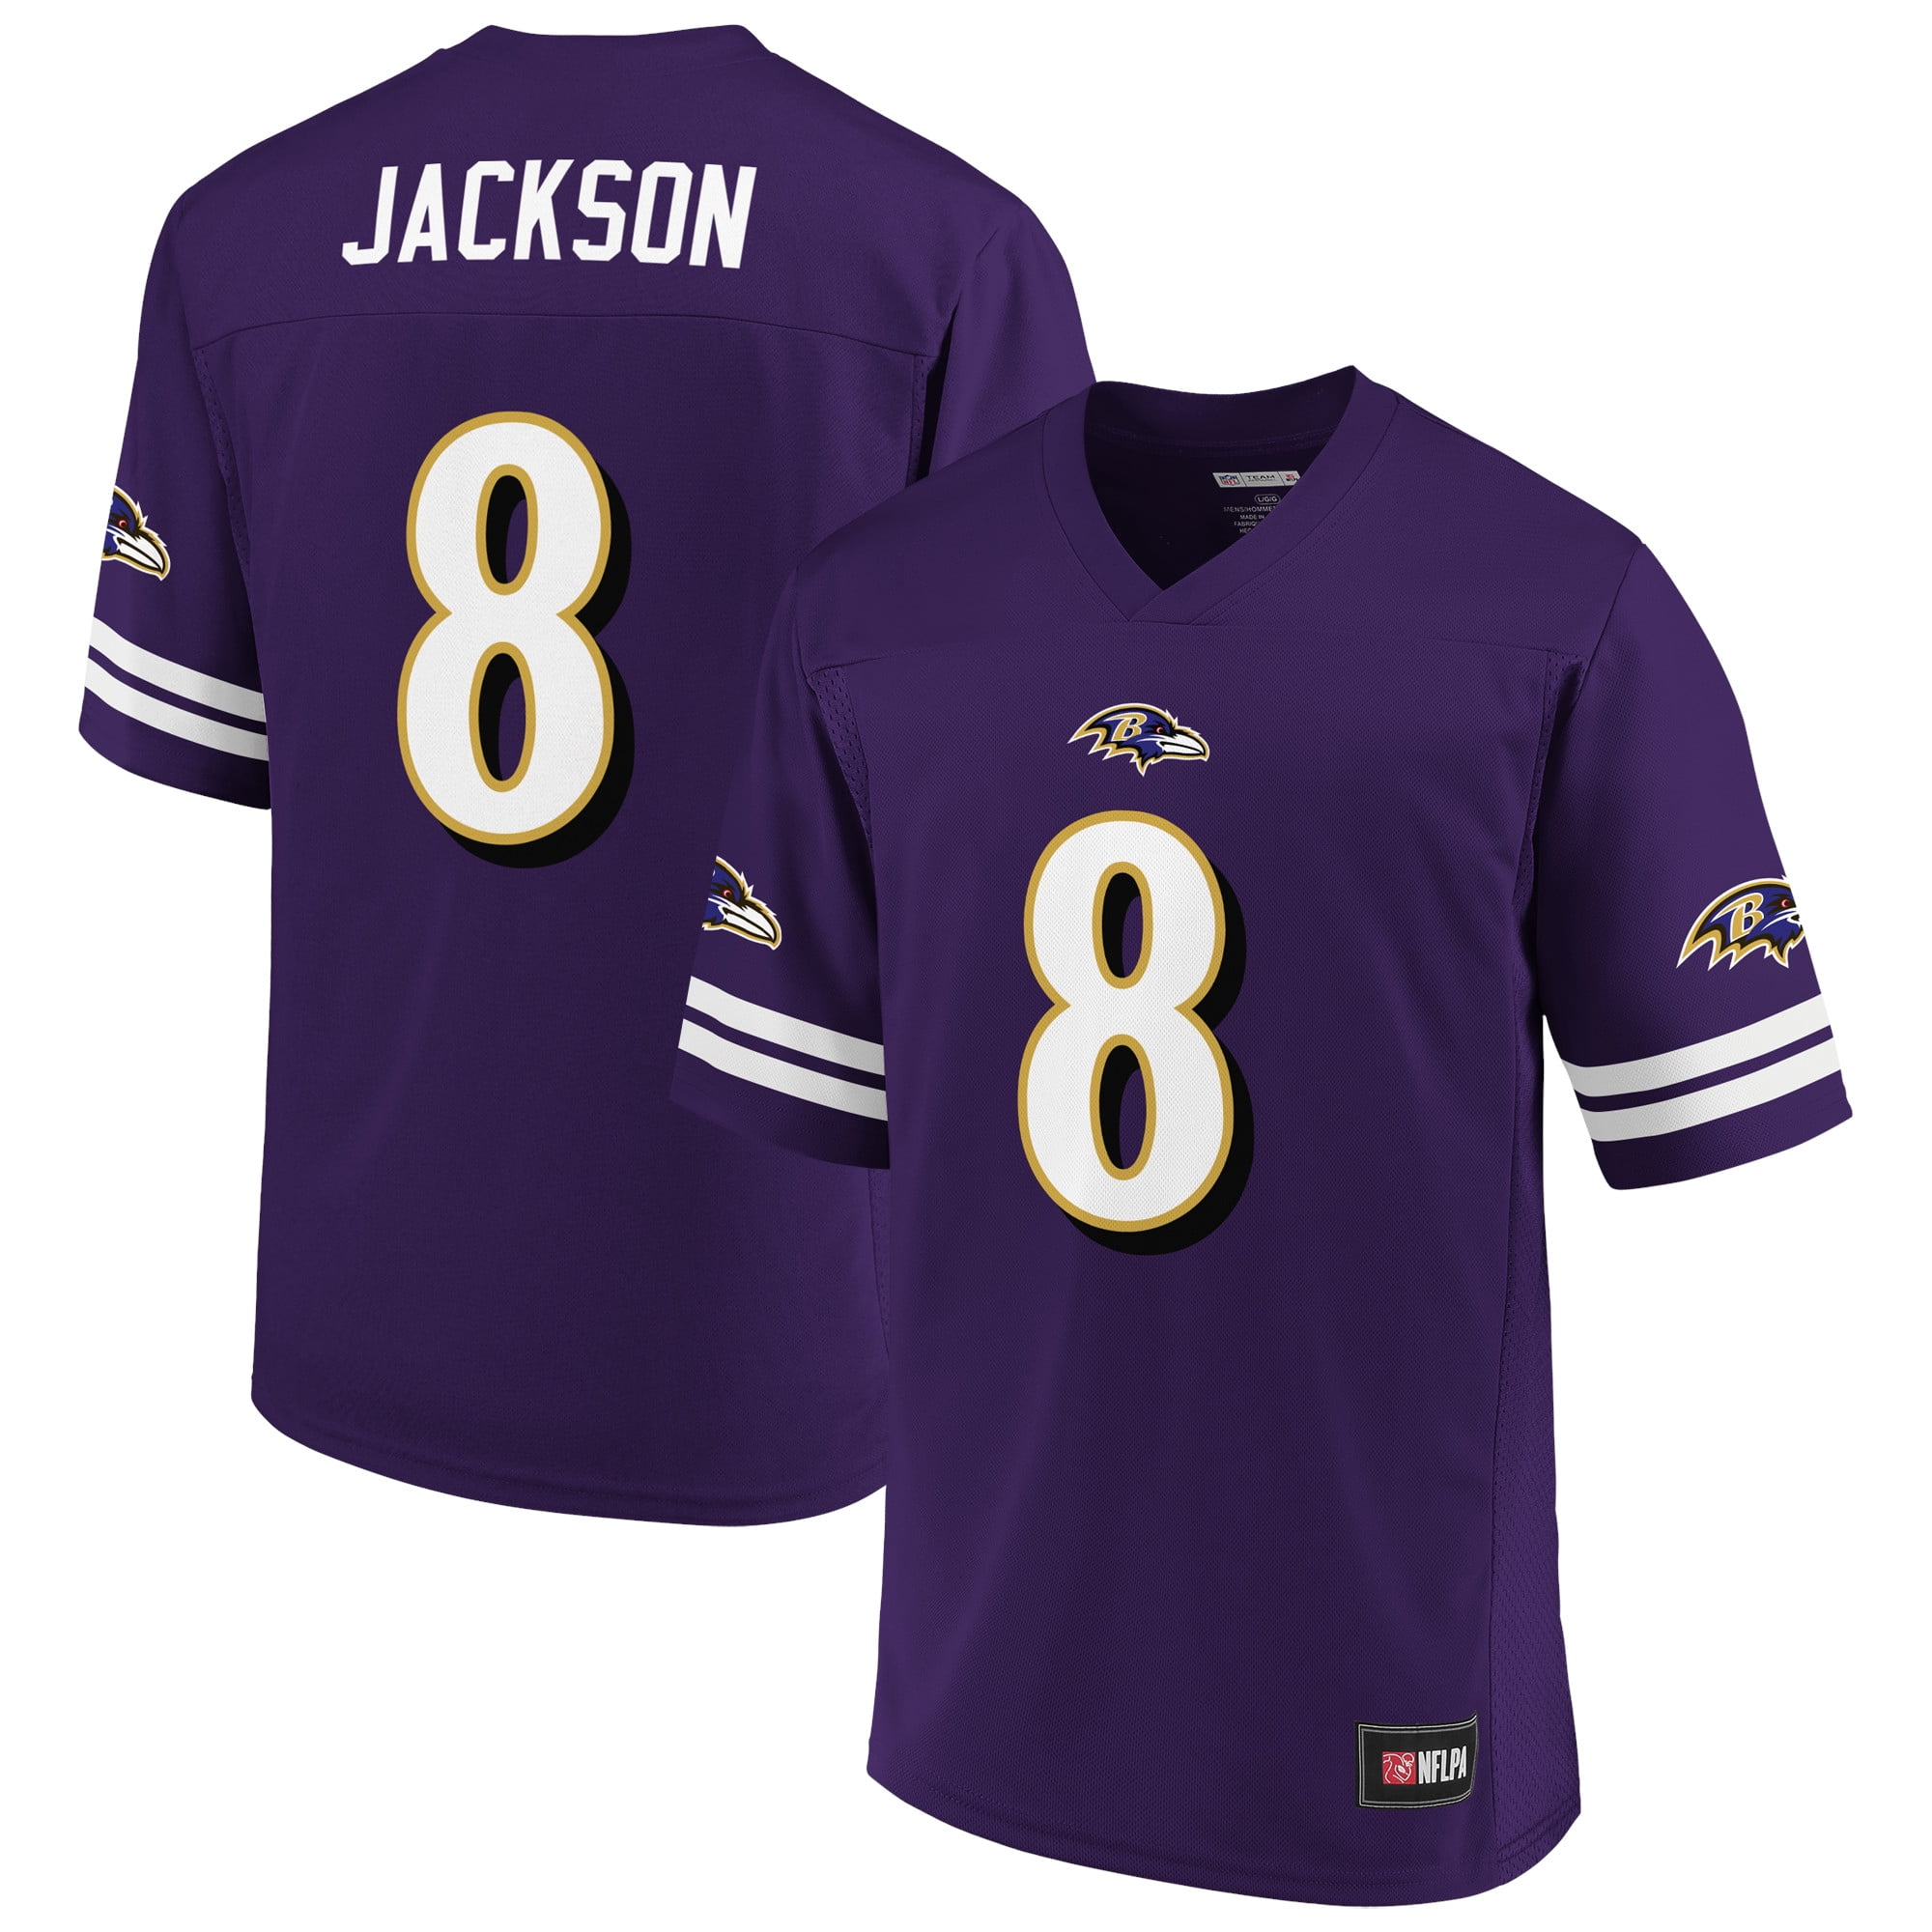 Men's NFL Pro Line by Fanatics Branded Lamar Jackson Purple Baltimore Ravens  Player Jersey 